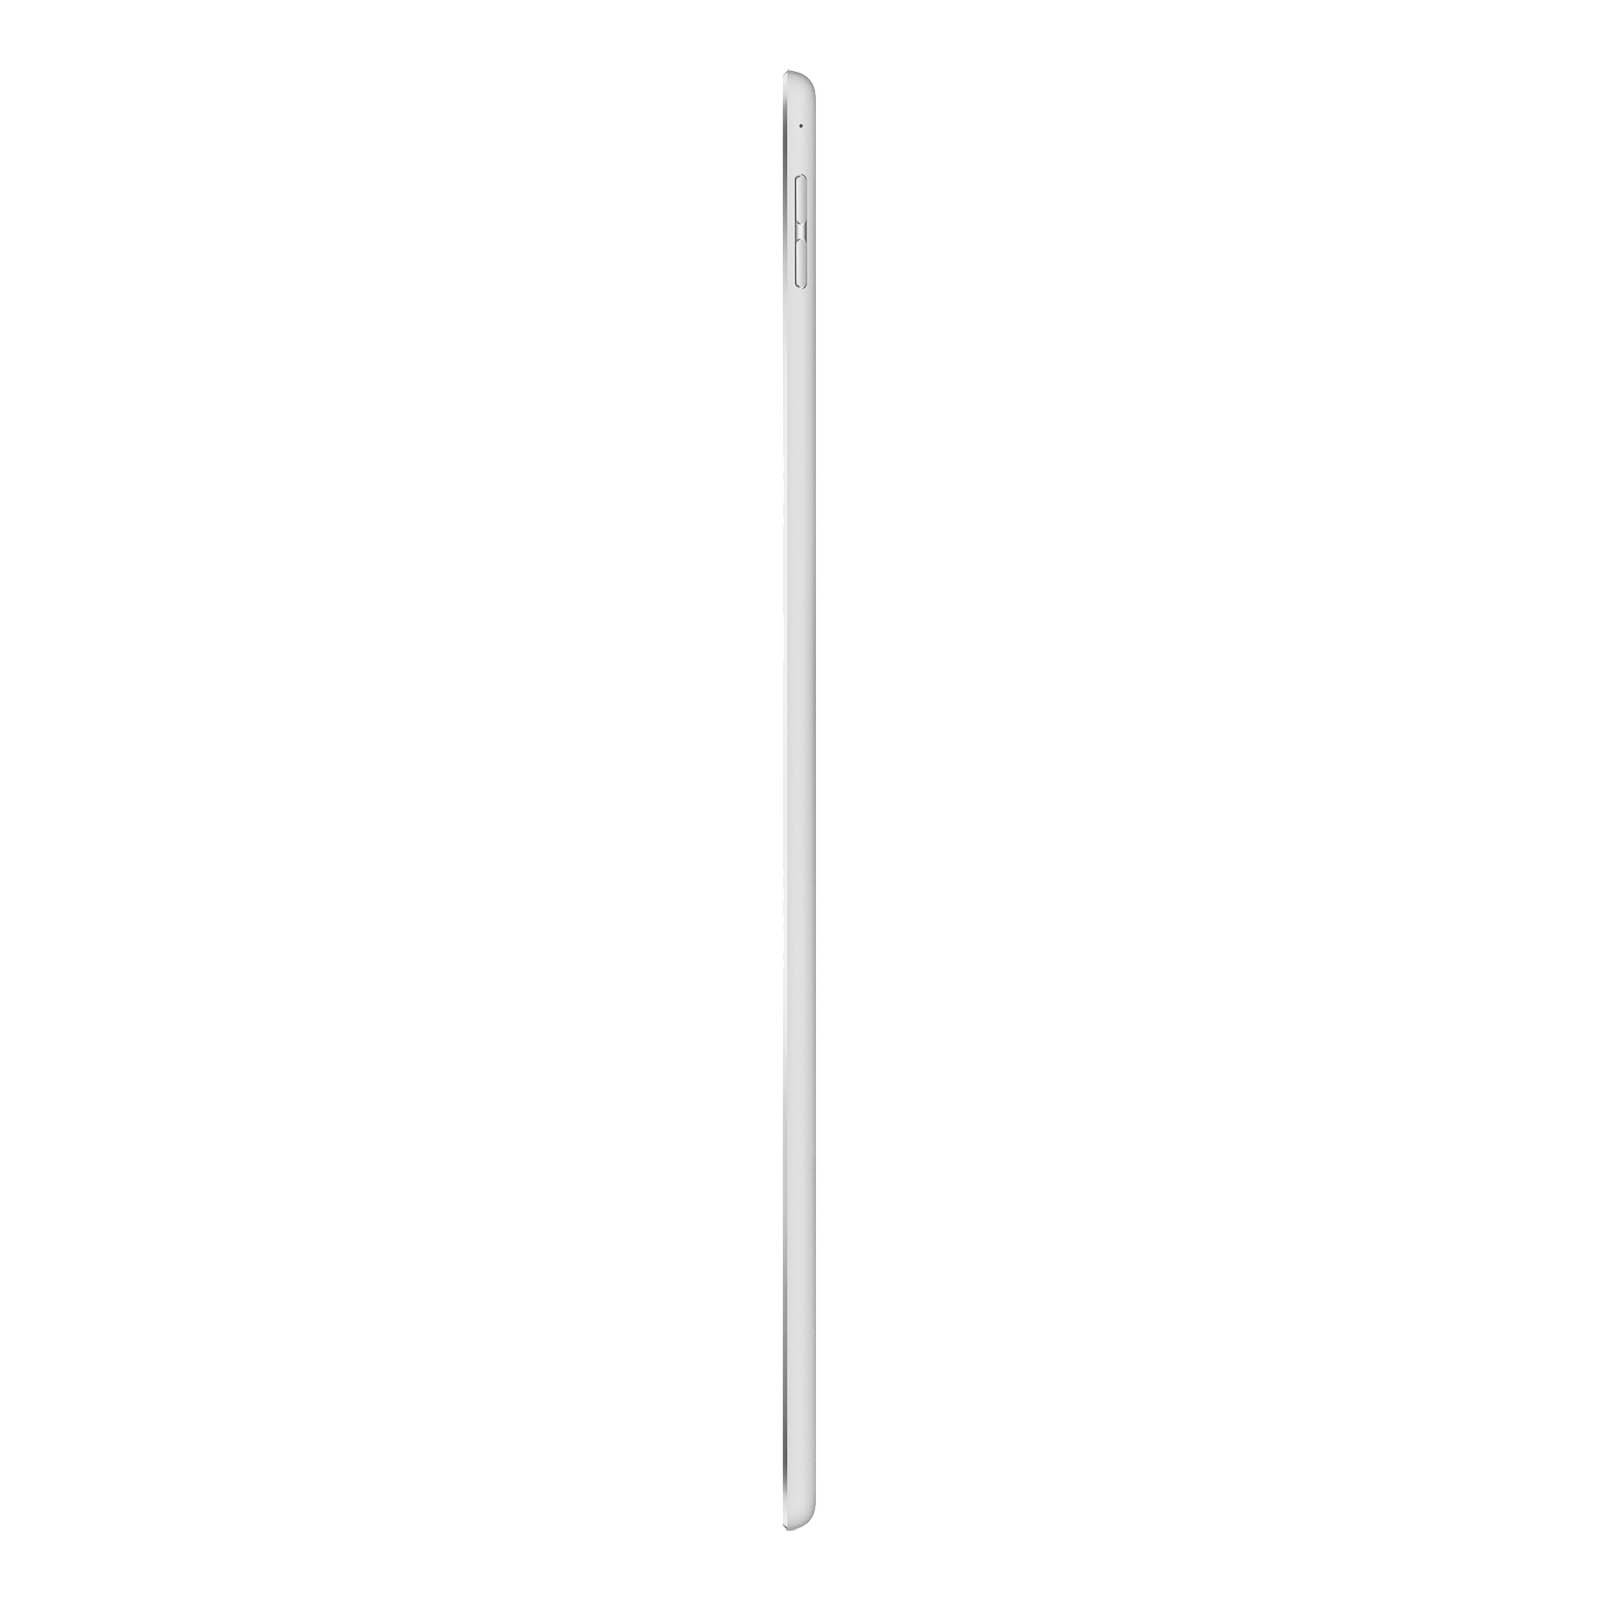 iPad Pro 12.9 Inch 3rd Gen 64GB Silver Good - Unlocked